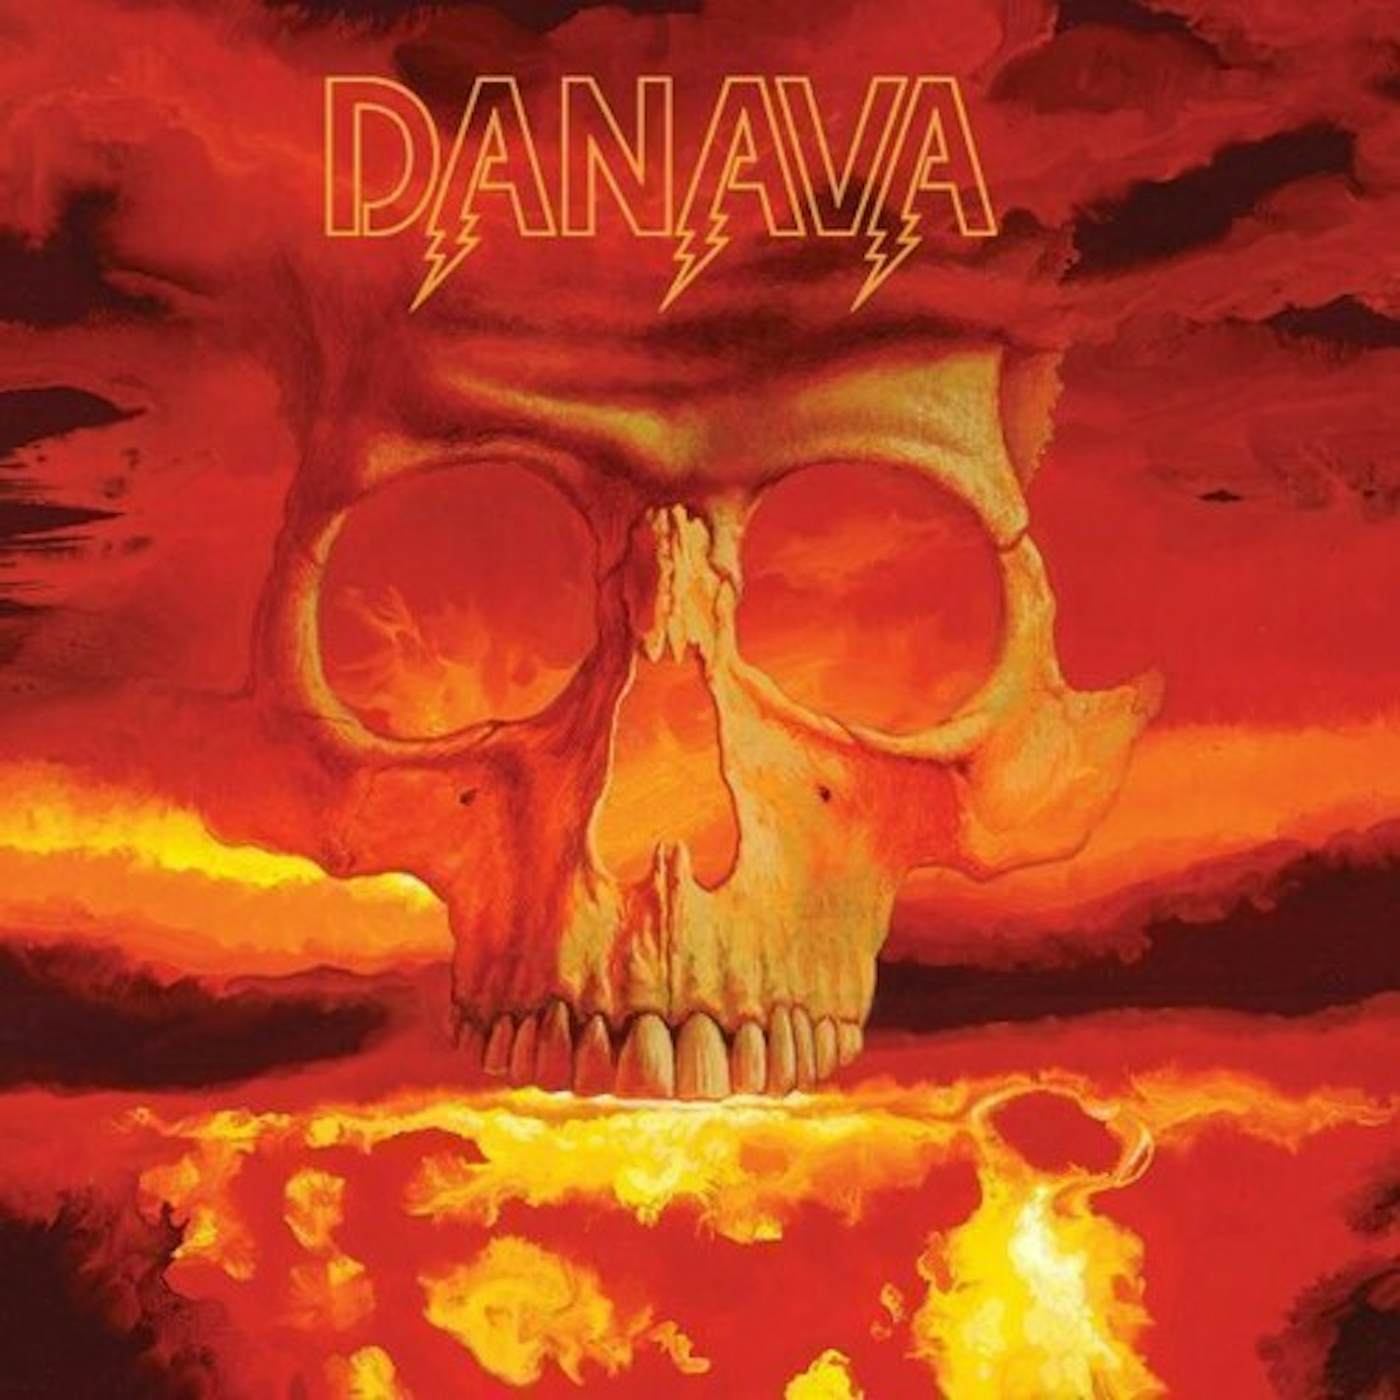 Danava Nothing But Nothing Vinyl Record